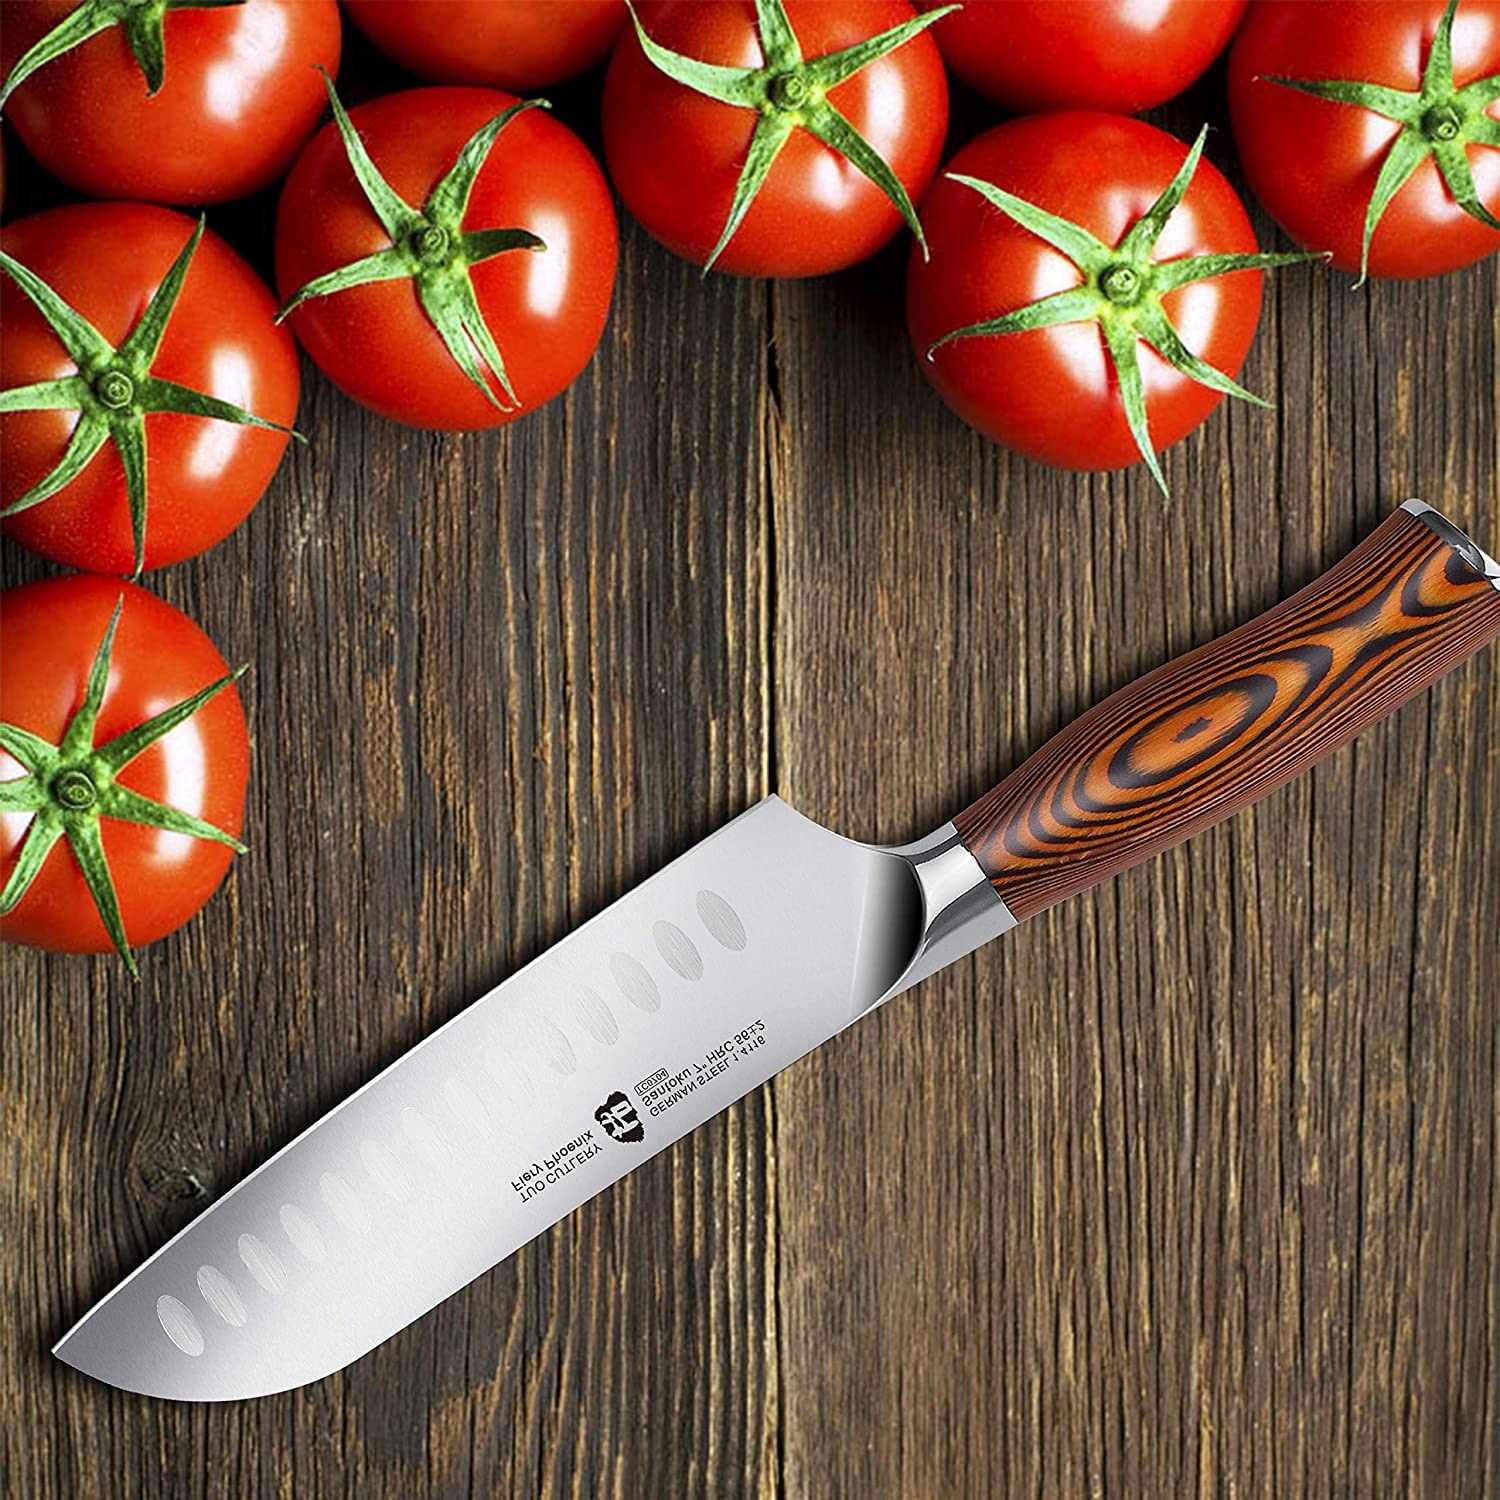 https://ak1.ostkcdn.com/images/products/is/images/direct/154b5219890f85439fdf699eab8b81f4b87f7156/Tuo-Cutlery-7%22-Santoku-Vegetable-Knife%2C-Fiery-Series.jpg